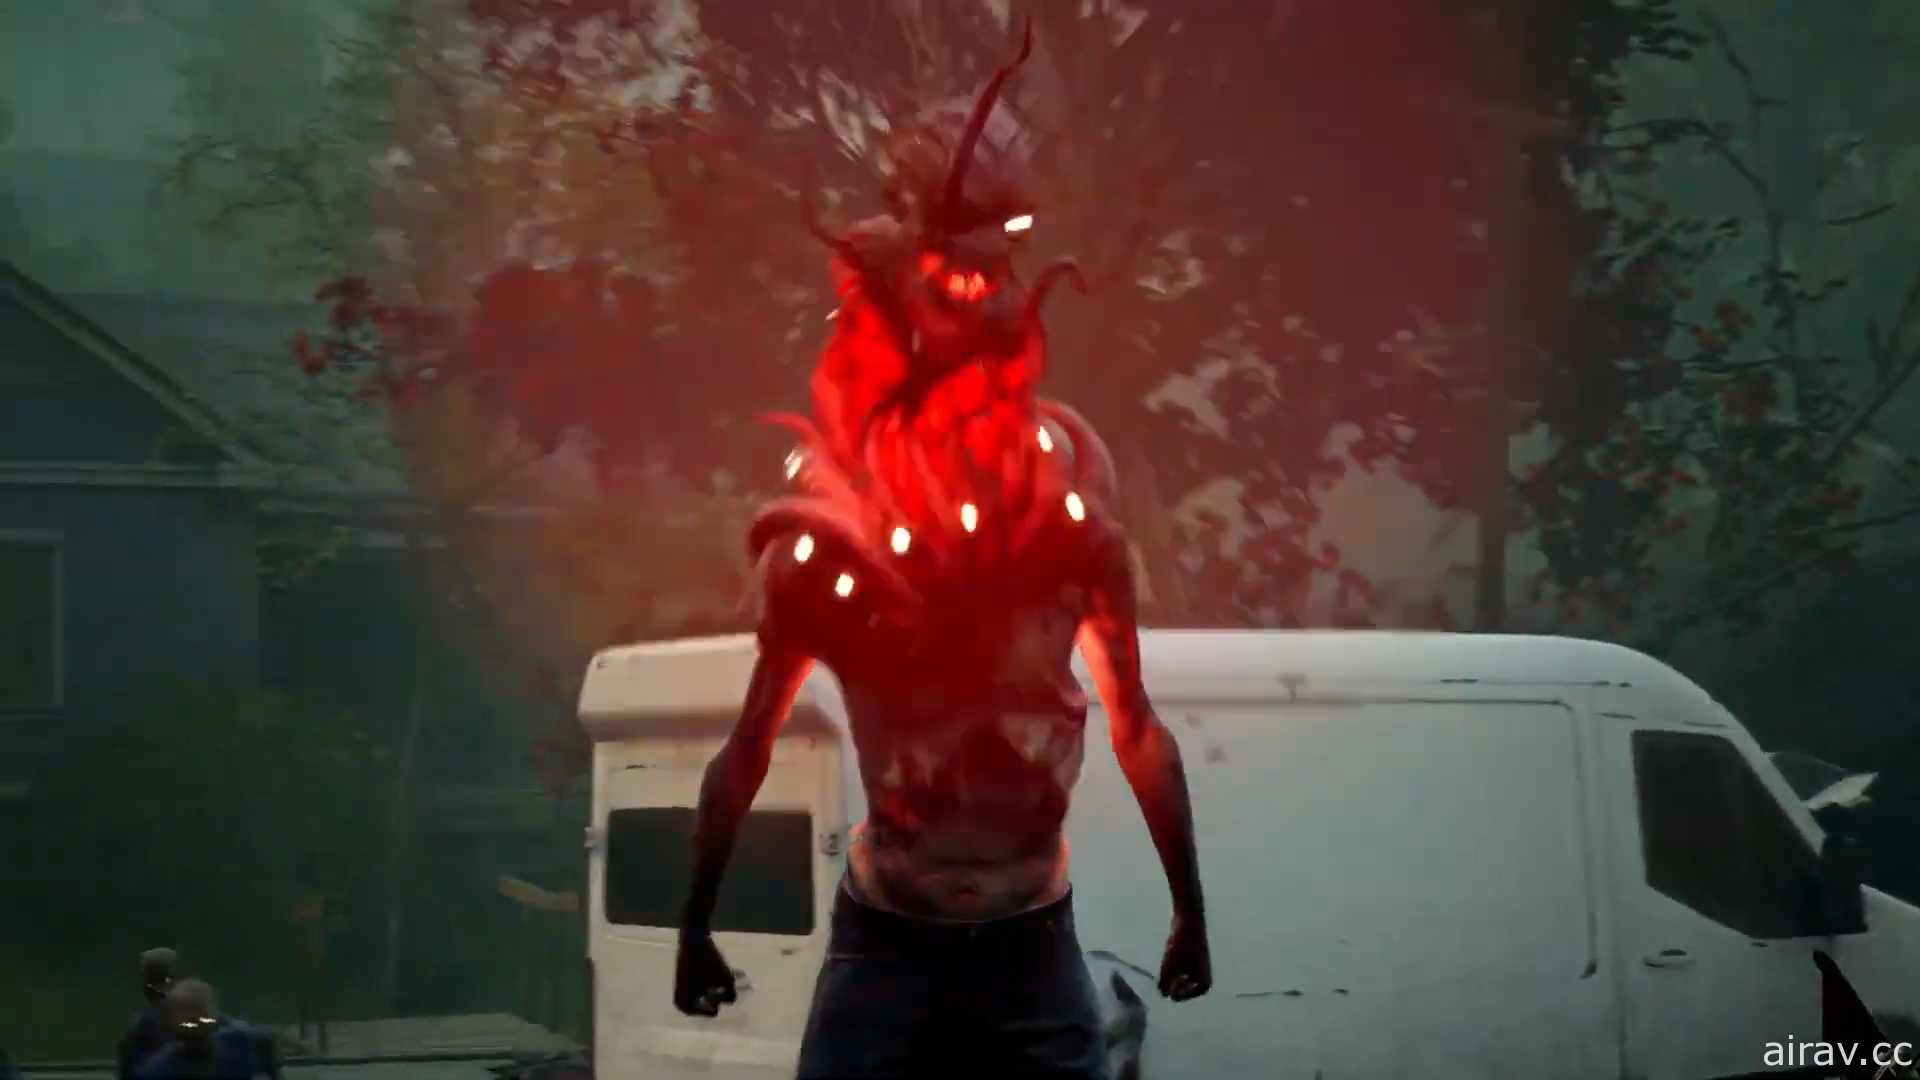 【E3 21】《喋血复仇》释出最新宣传影片 PVP 模式于影中曝光